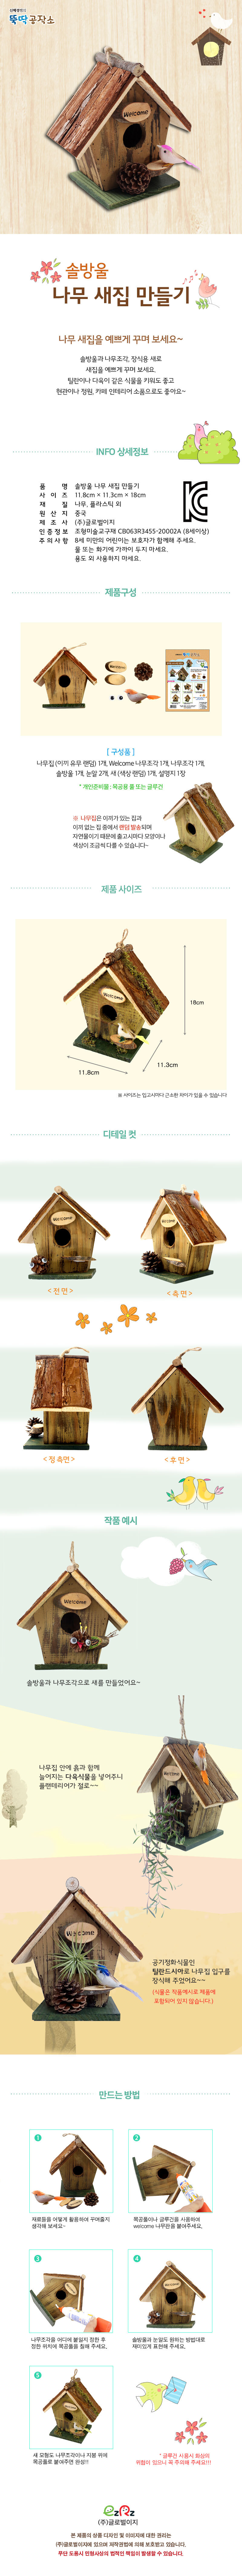 wooden_house_p.jpg